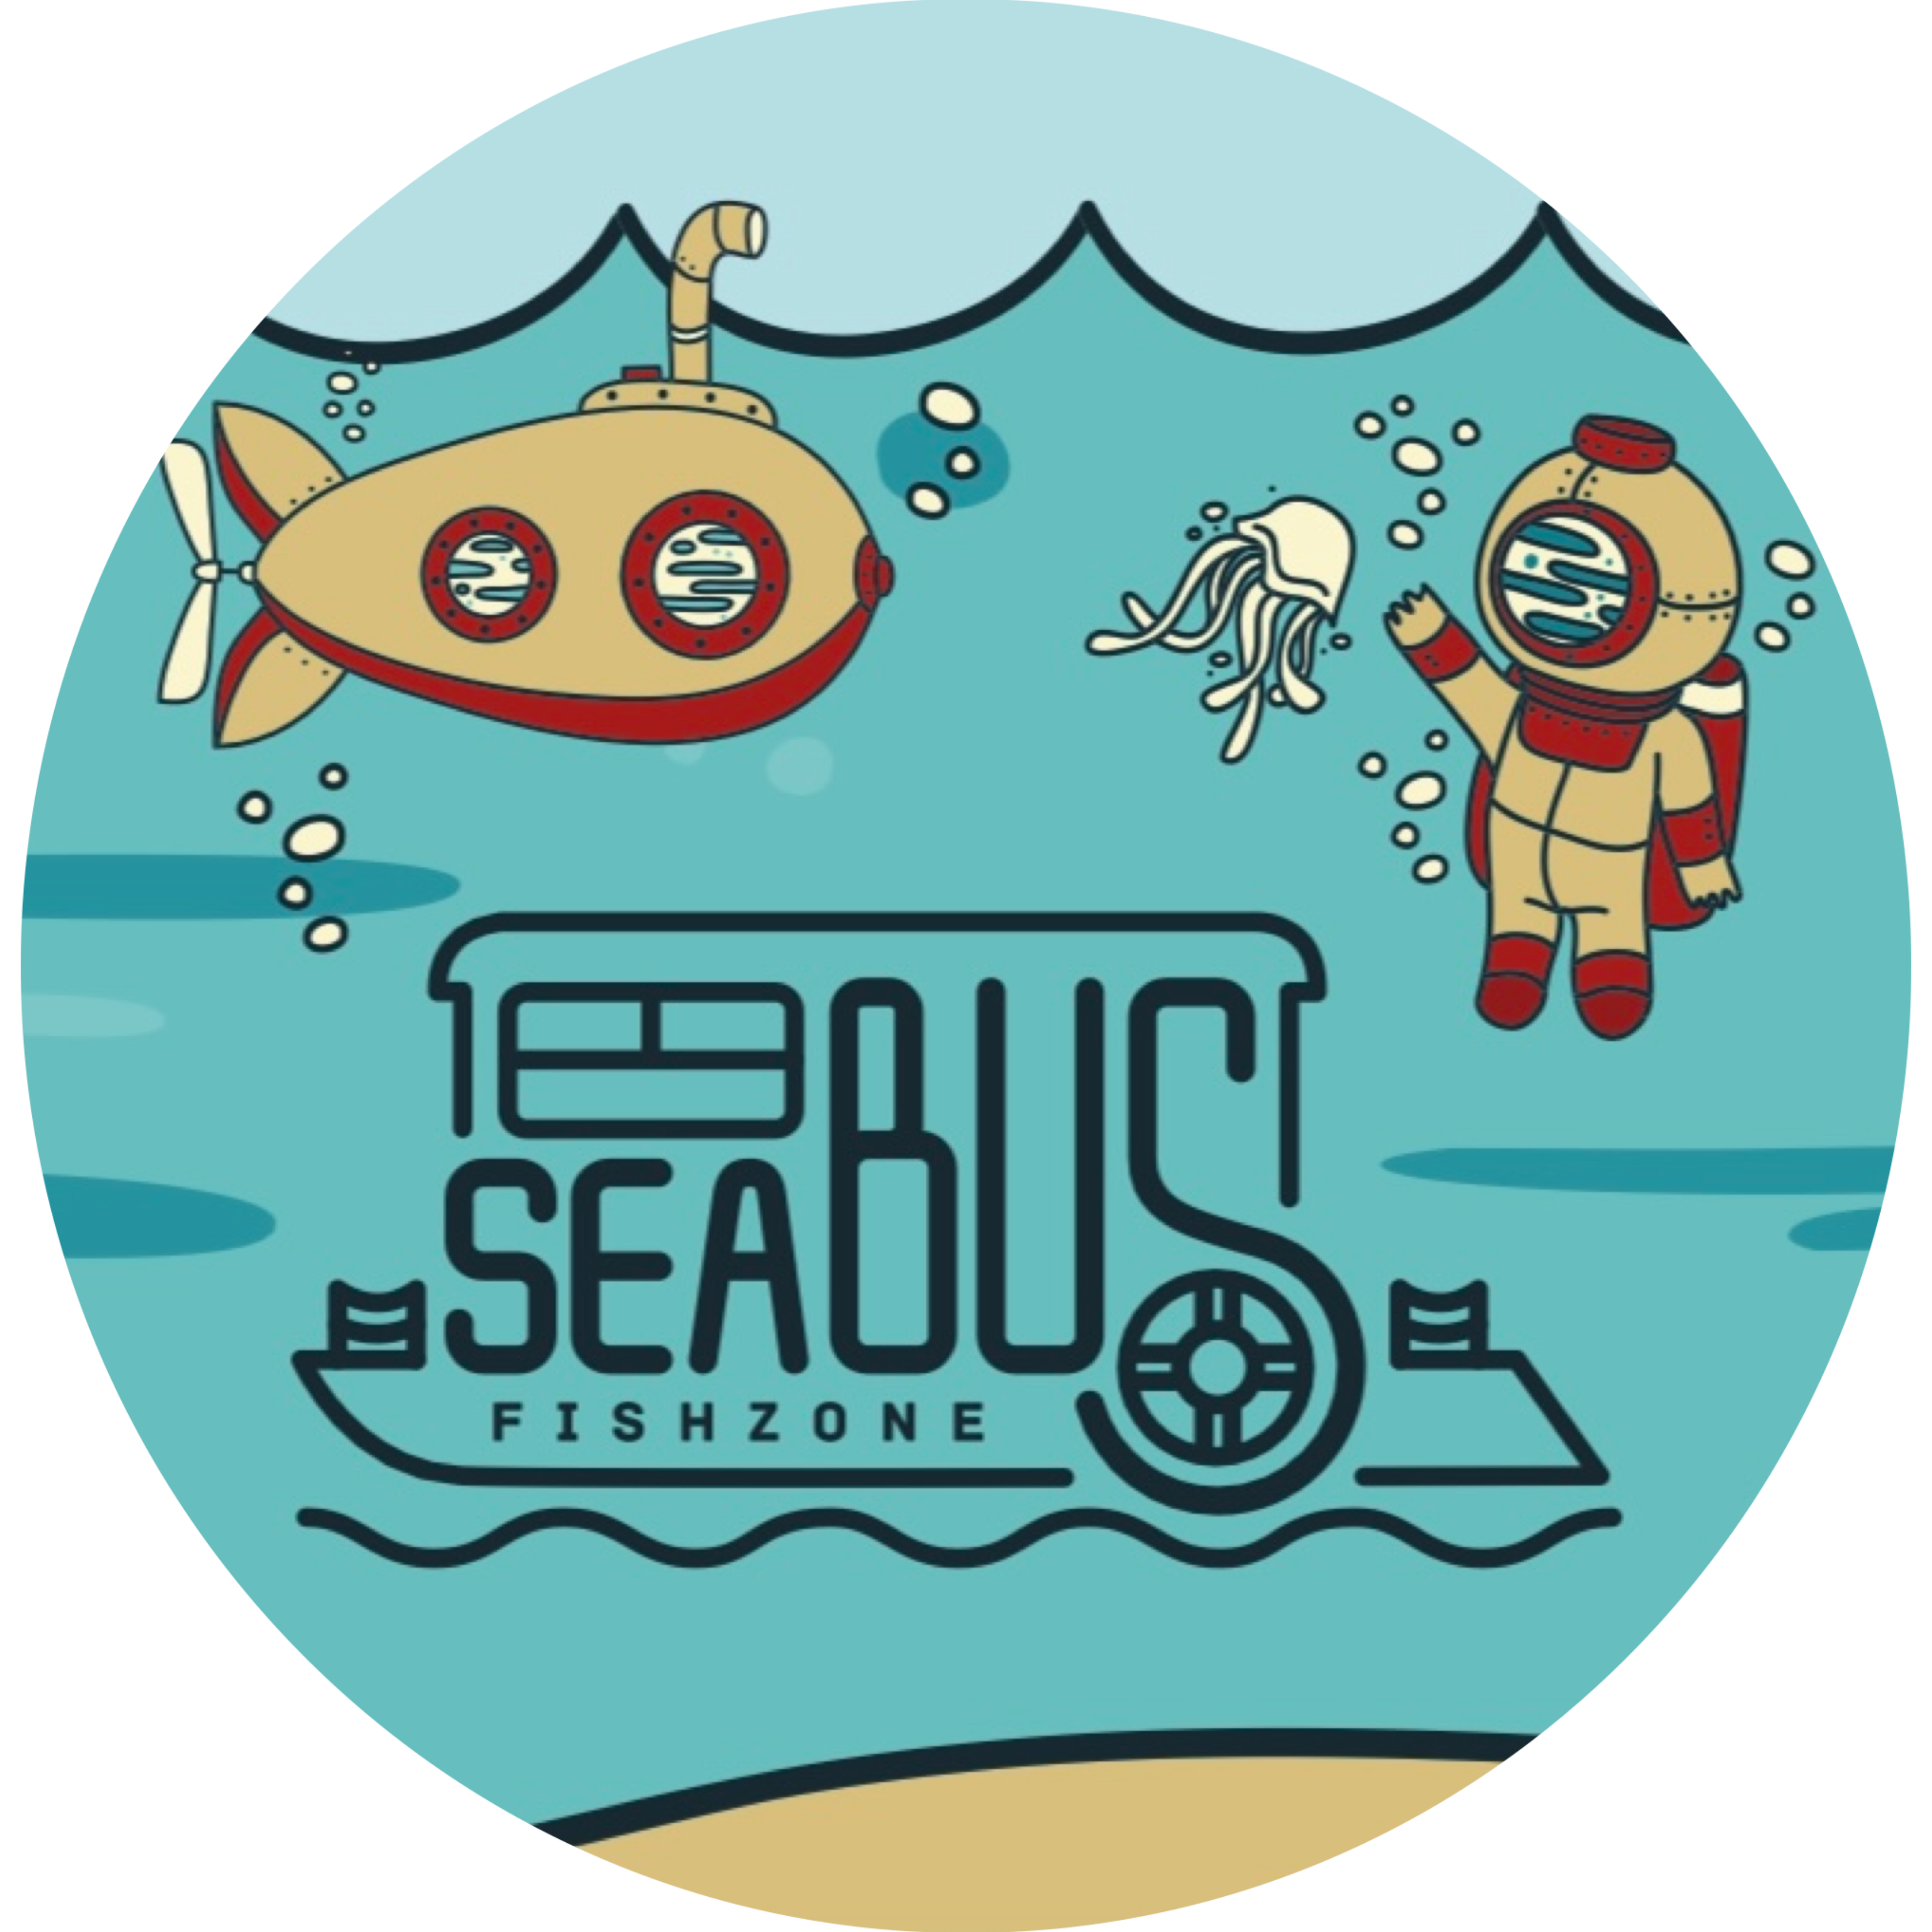 Сочи орджоникидзе 5. Seabus Сочи. Ресторан морской Сочи лого. Кафе Сочи логотип в. Seabus Сочи ресторан меню.